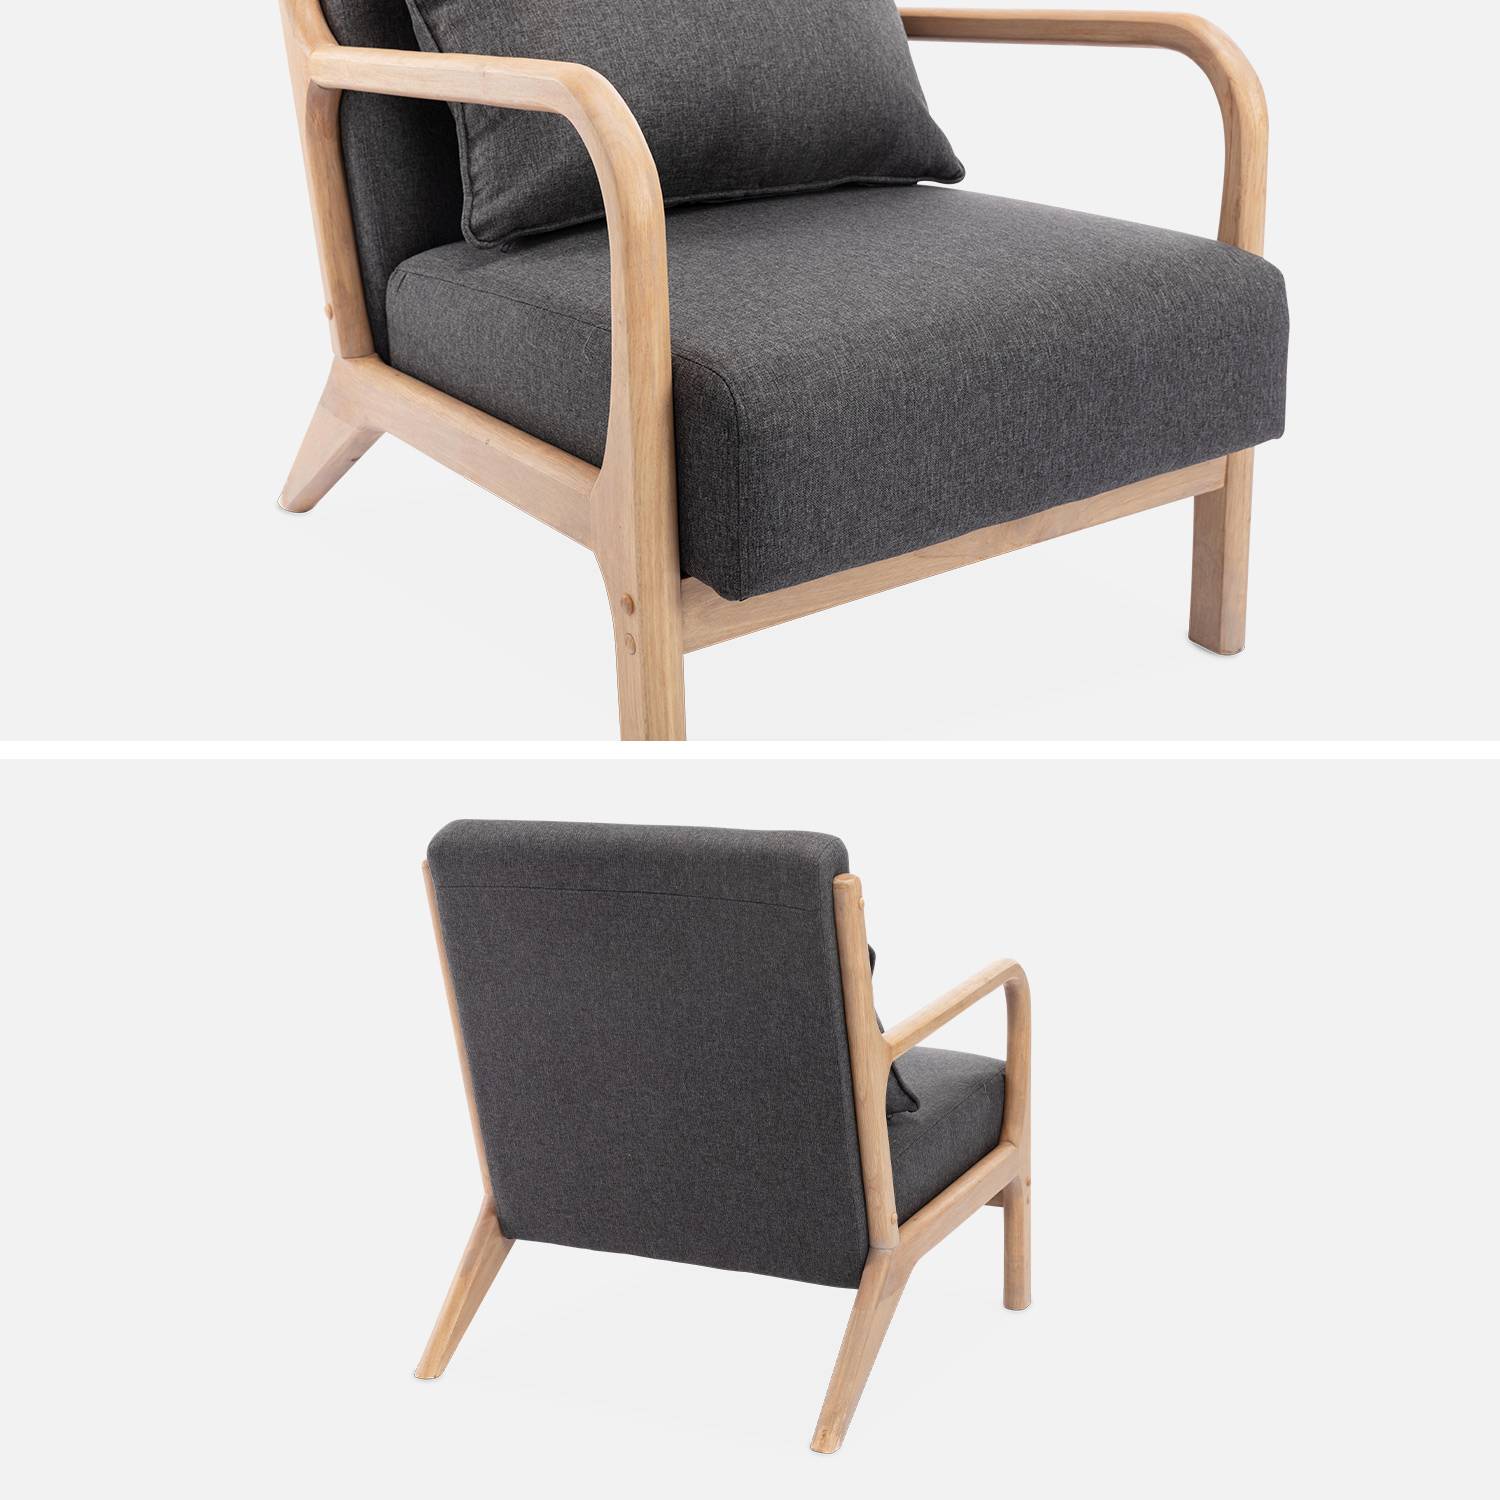 Sillón de diseño de madera y tela, 1 asiento recto fijo, patas de compás escandinavas, armazón de madera maciza, asiento cómodo, gris oscuro,sweeek,Photo6